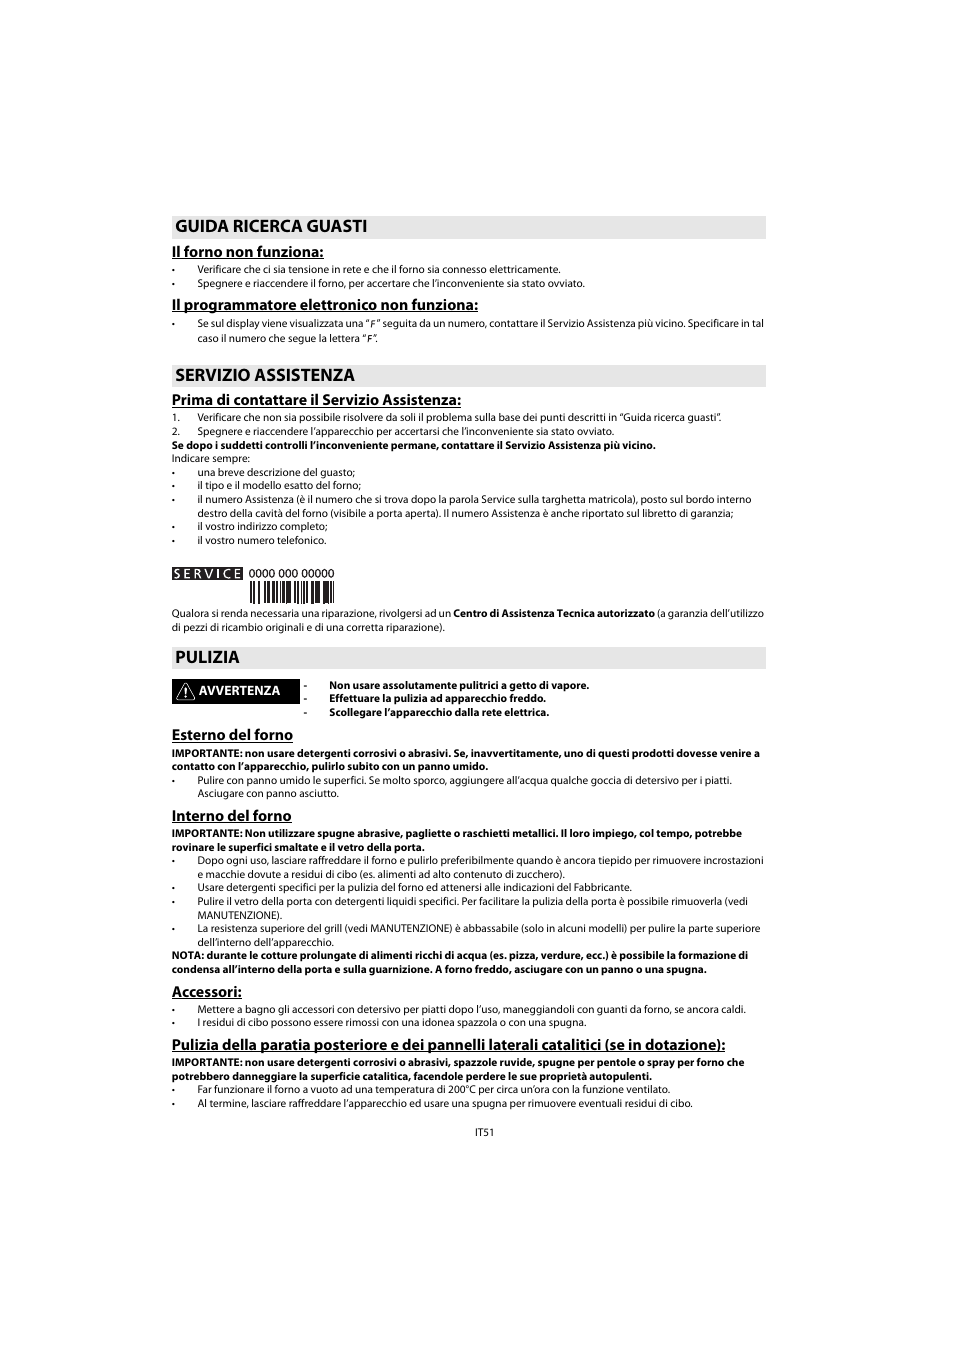 Guida ricerca guasti servizio assistenza pulizia | Whirlpool AKZM 756-NB Manuale d'uso | Pagina 3 / 18